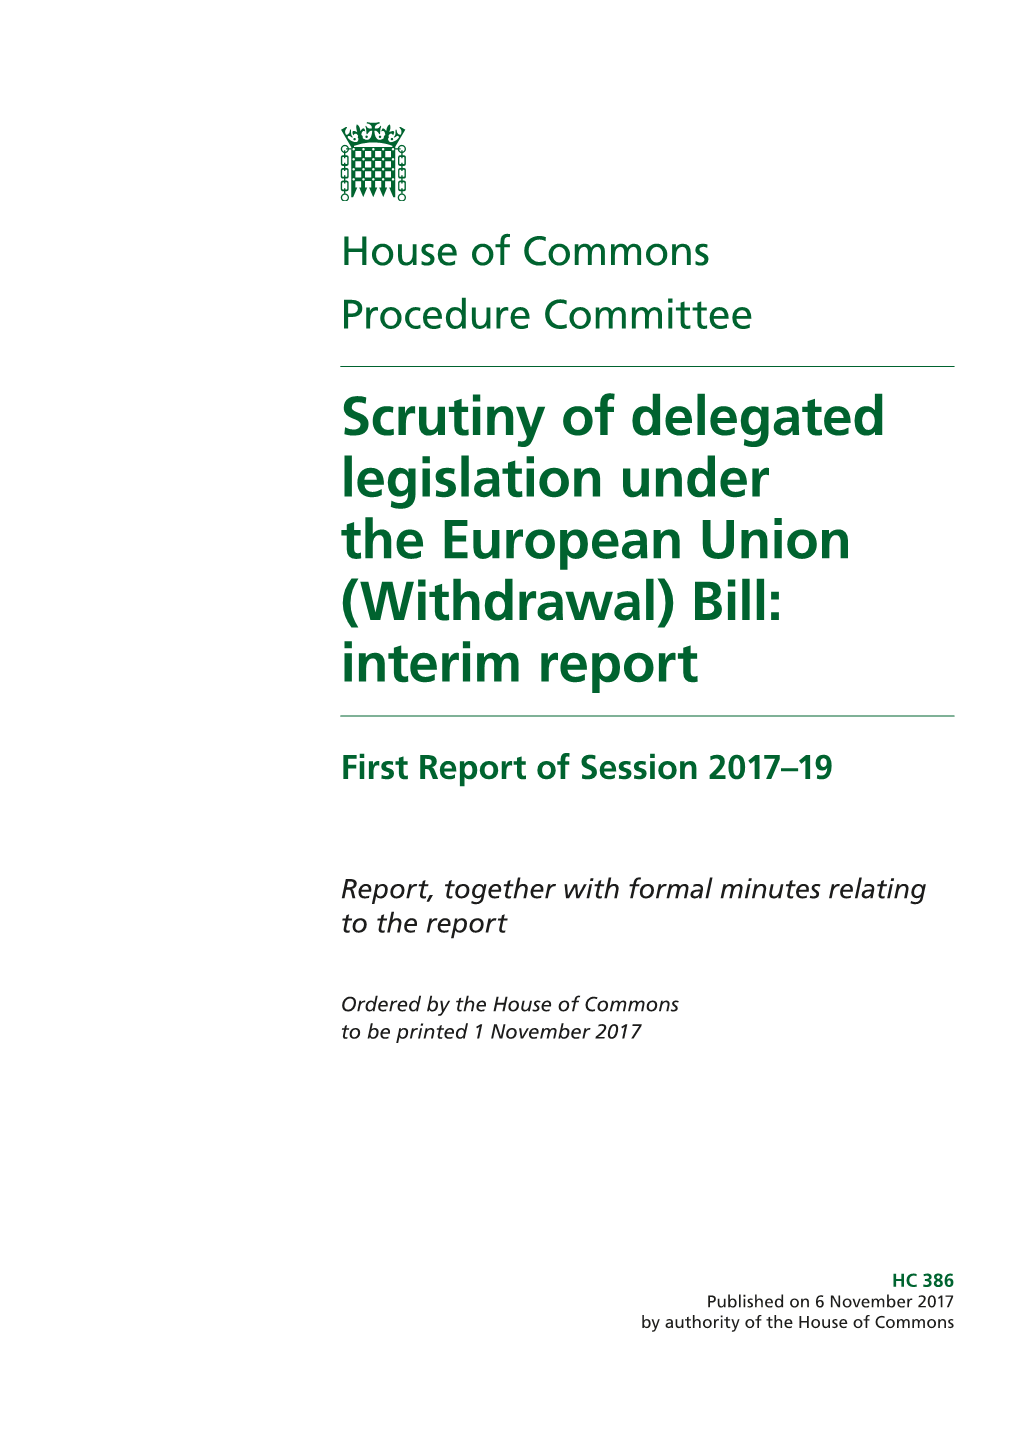 Scrutiny of Delegated Legislation Under the European Union (Withdrawal) Bill: Interim Report